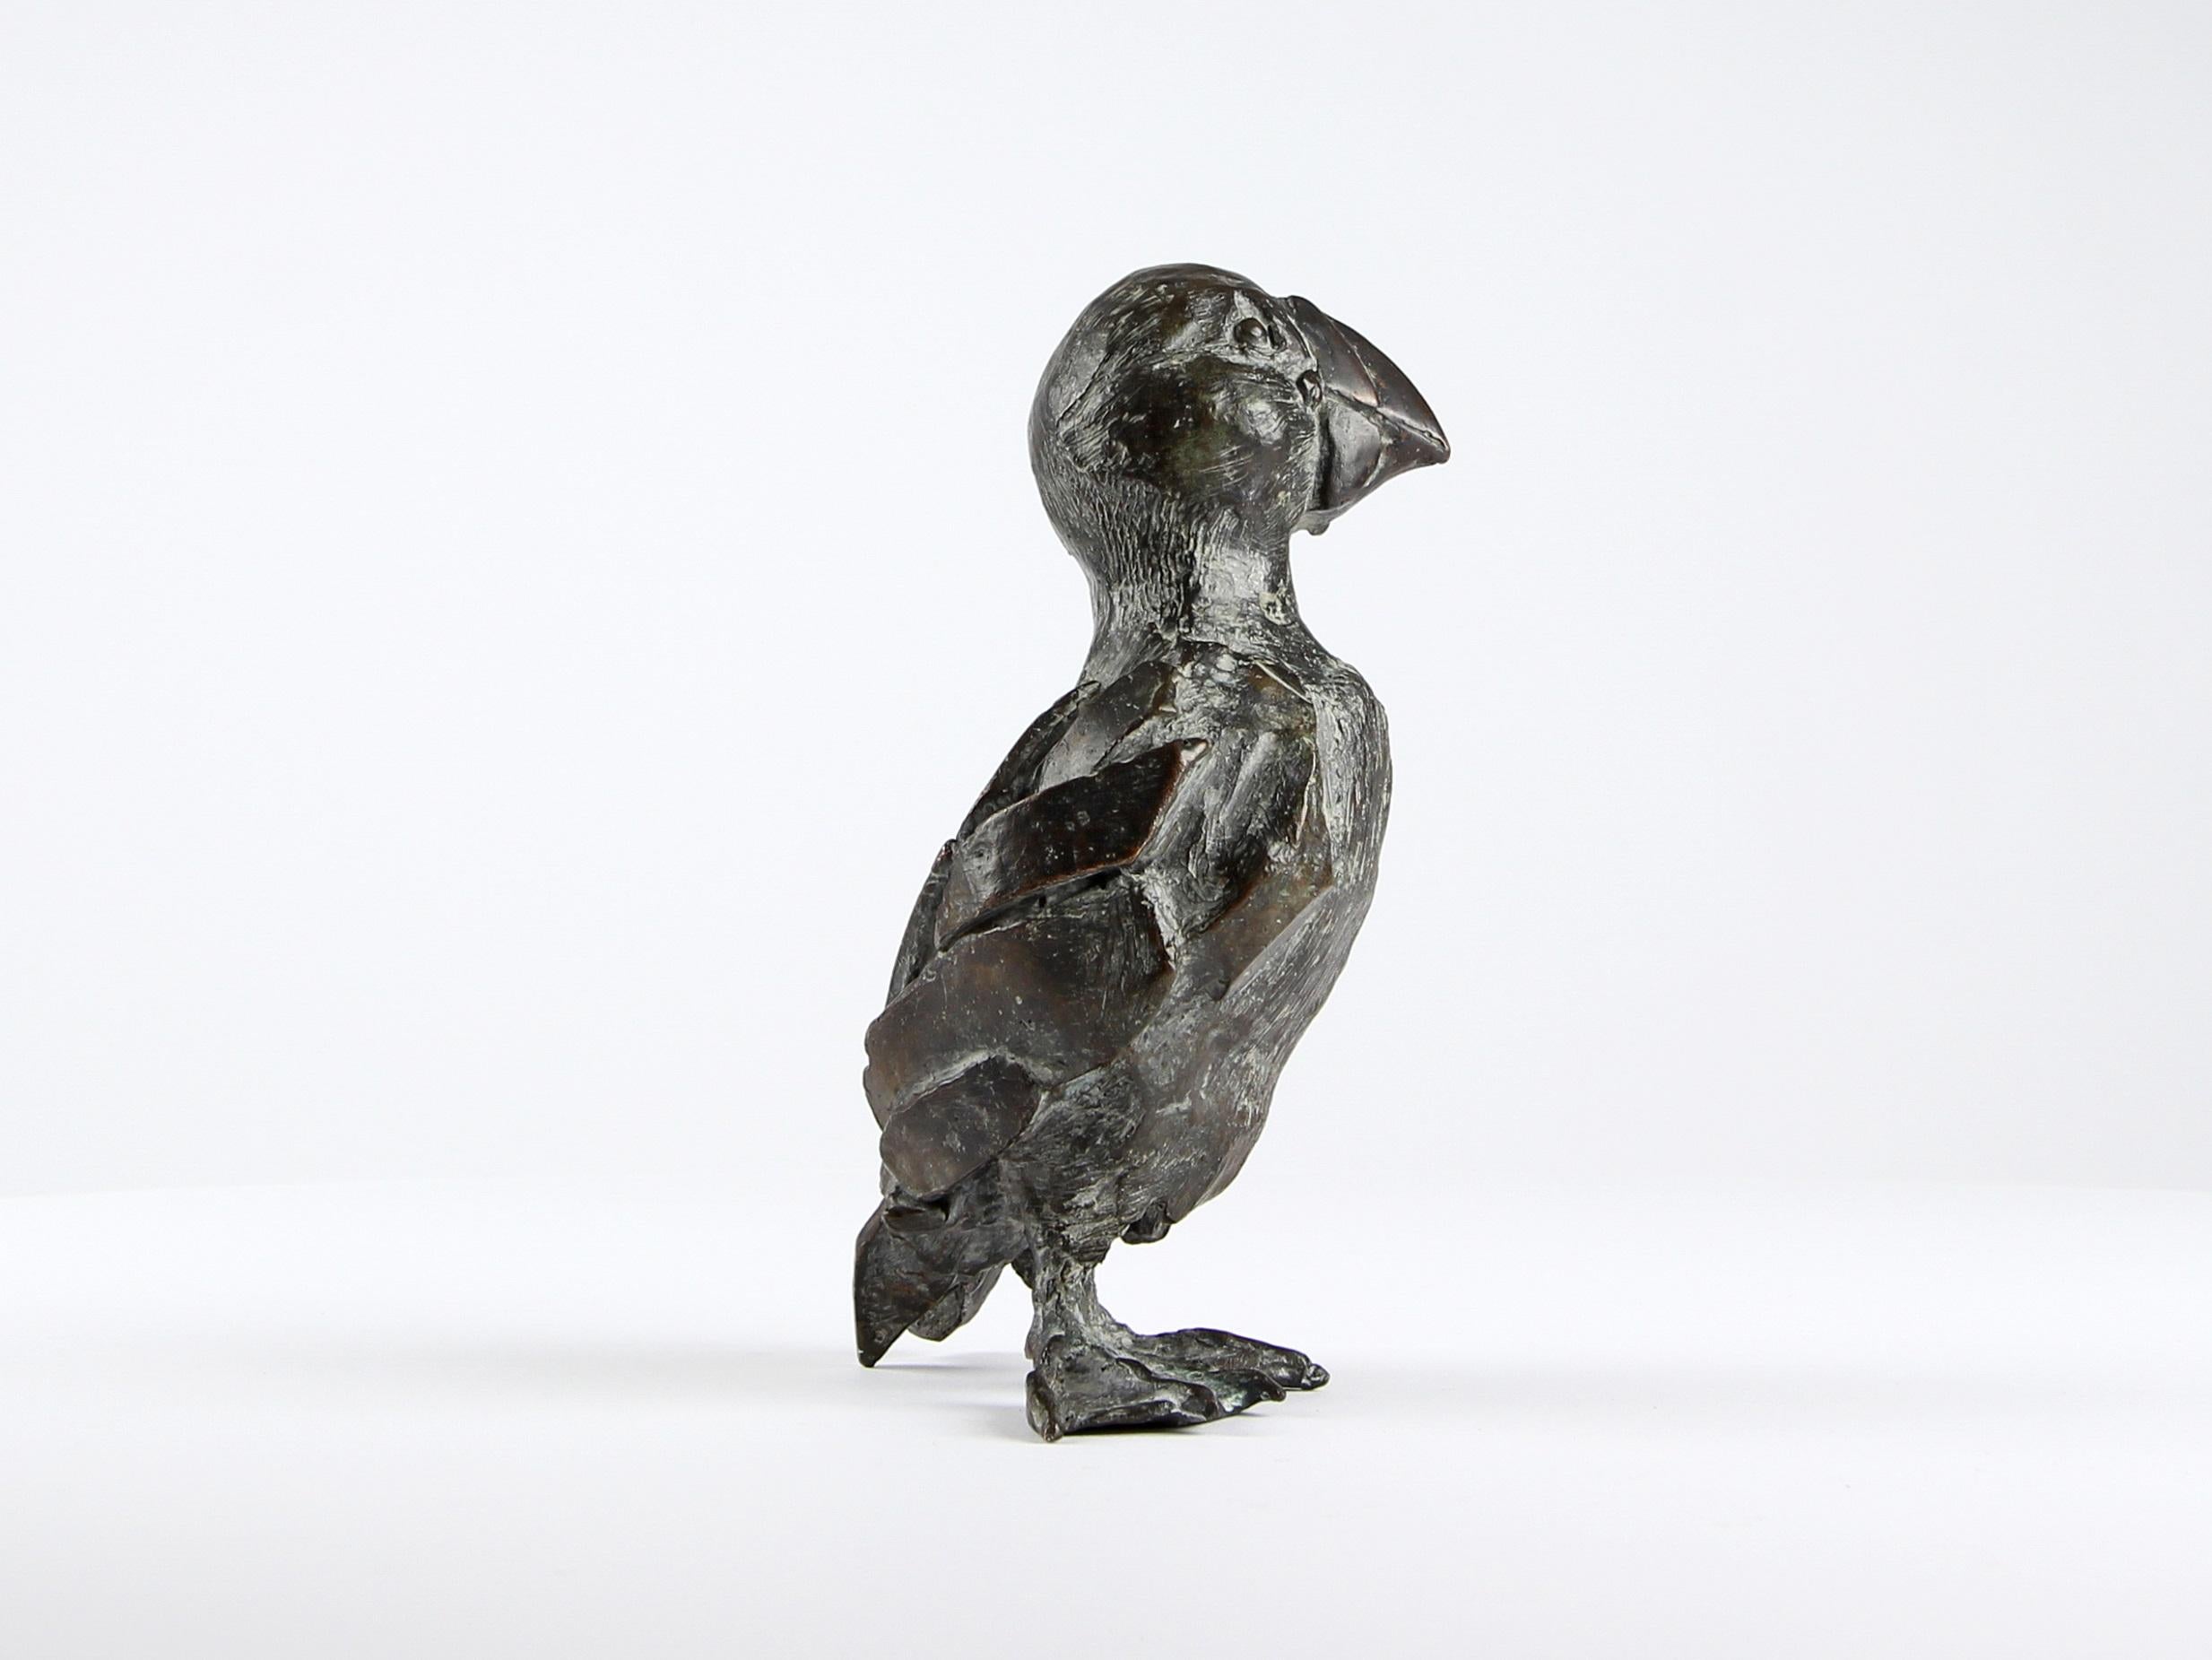 Puffin by Chésade - Bronze sculpture, animal art, expressionism, realism, bird For Sale 2